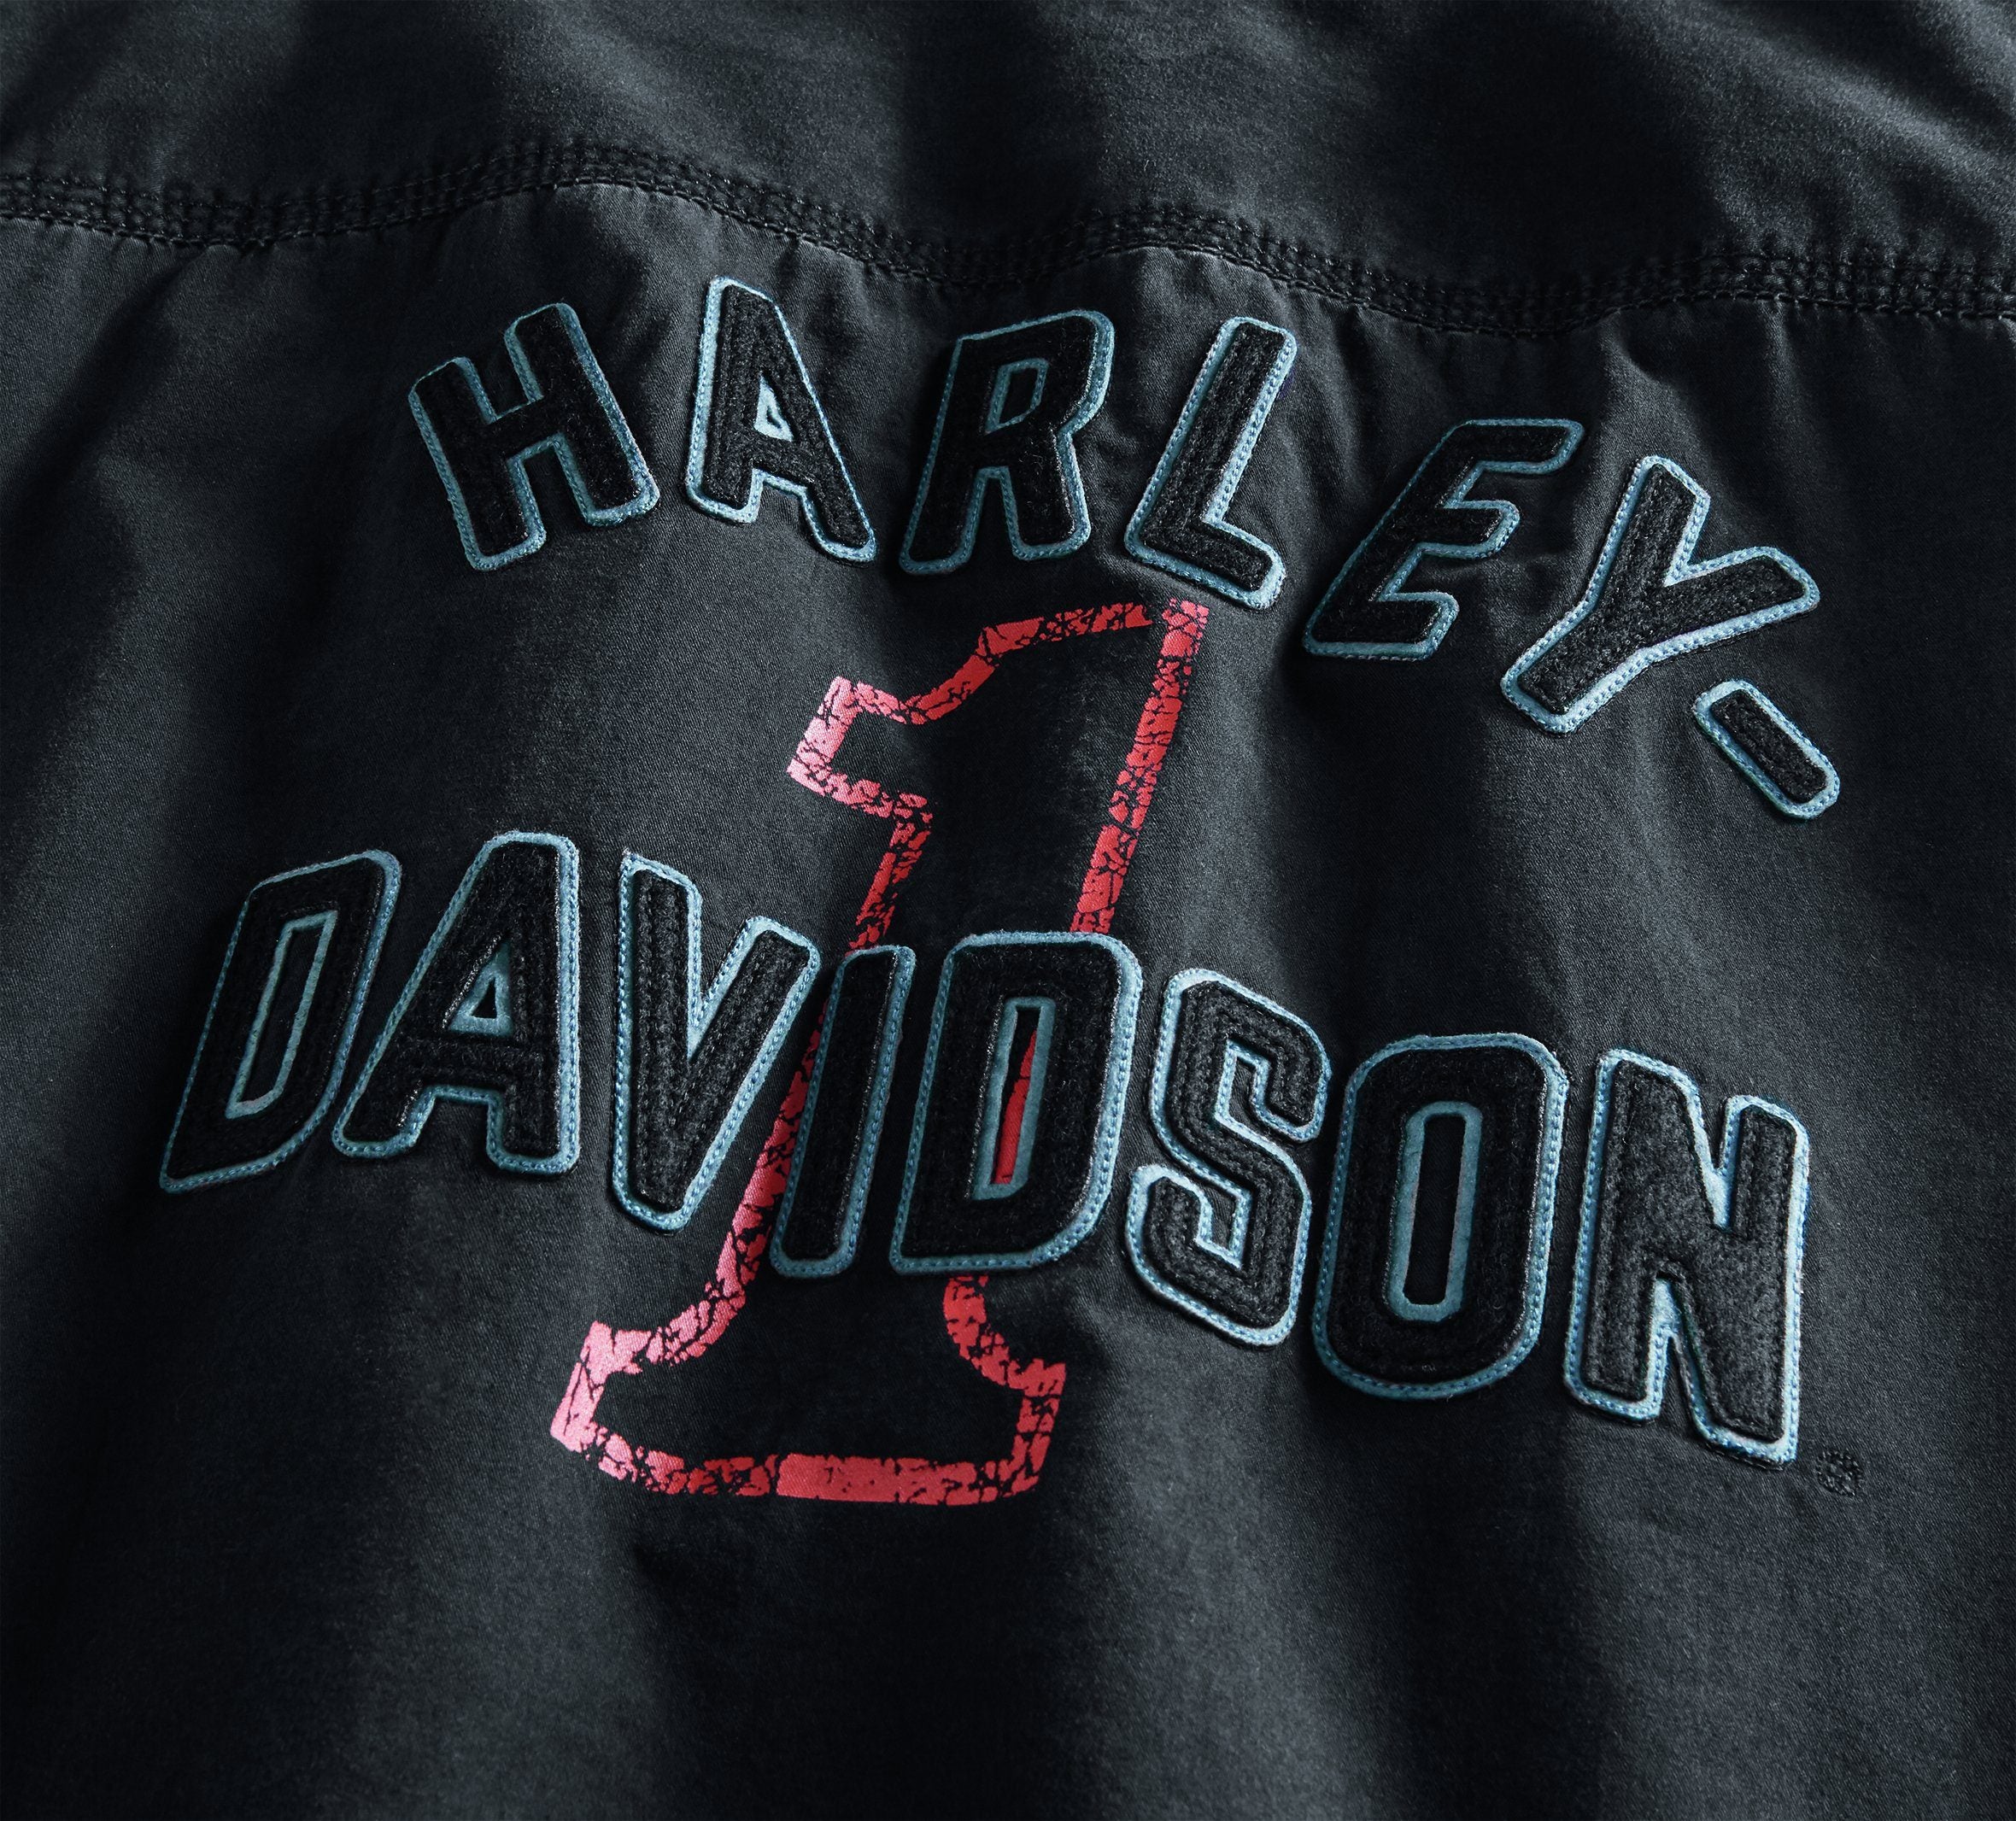 Harley-Davidson Men's #1 Racing Logo Button Front Short Sleeve Shirt 96009-20VM